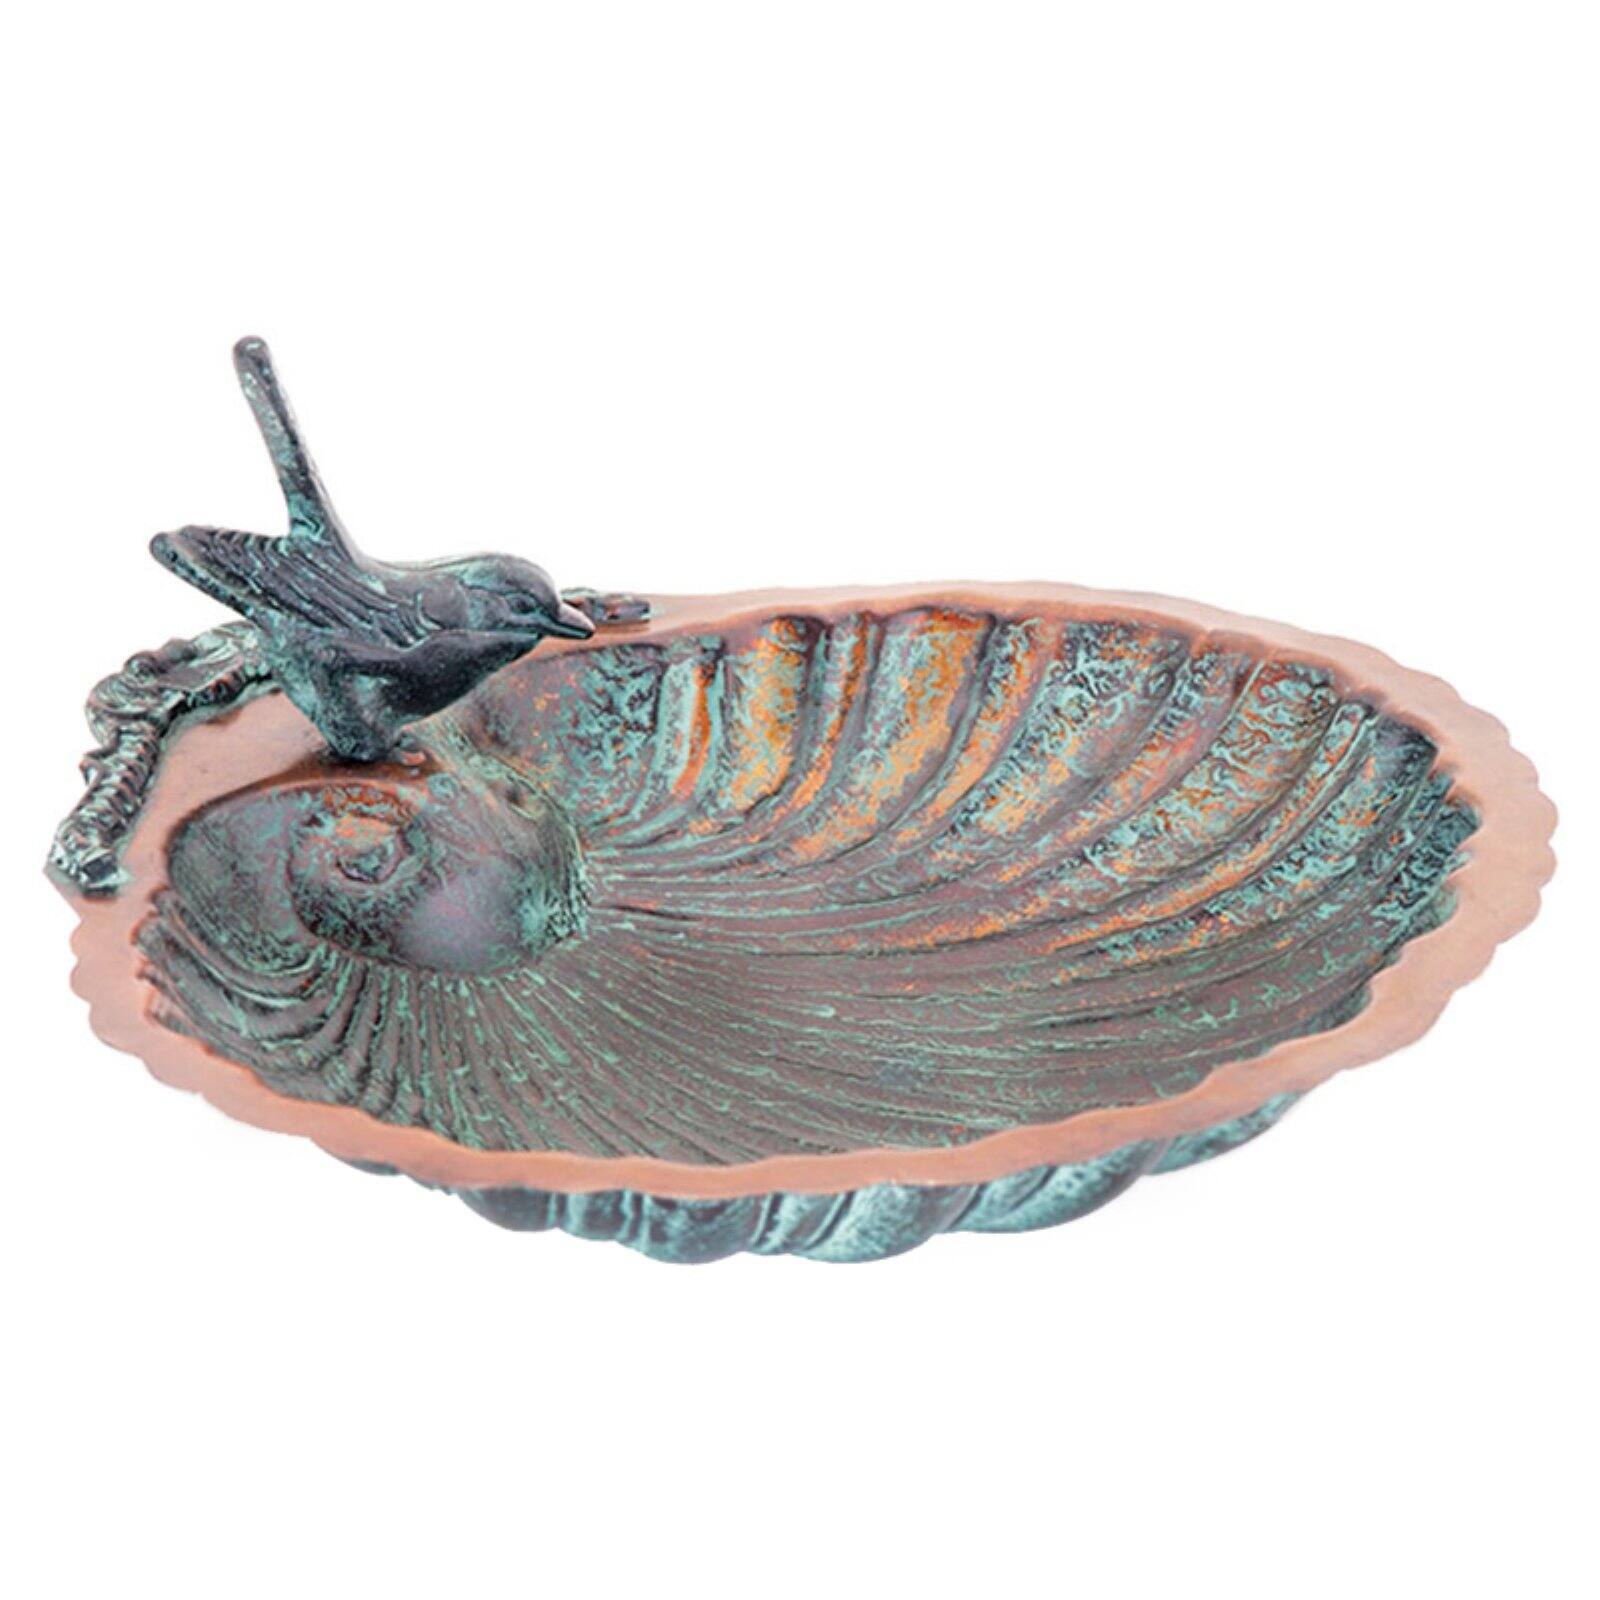 Scallop Shell Birdbath - image 1 of 2